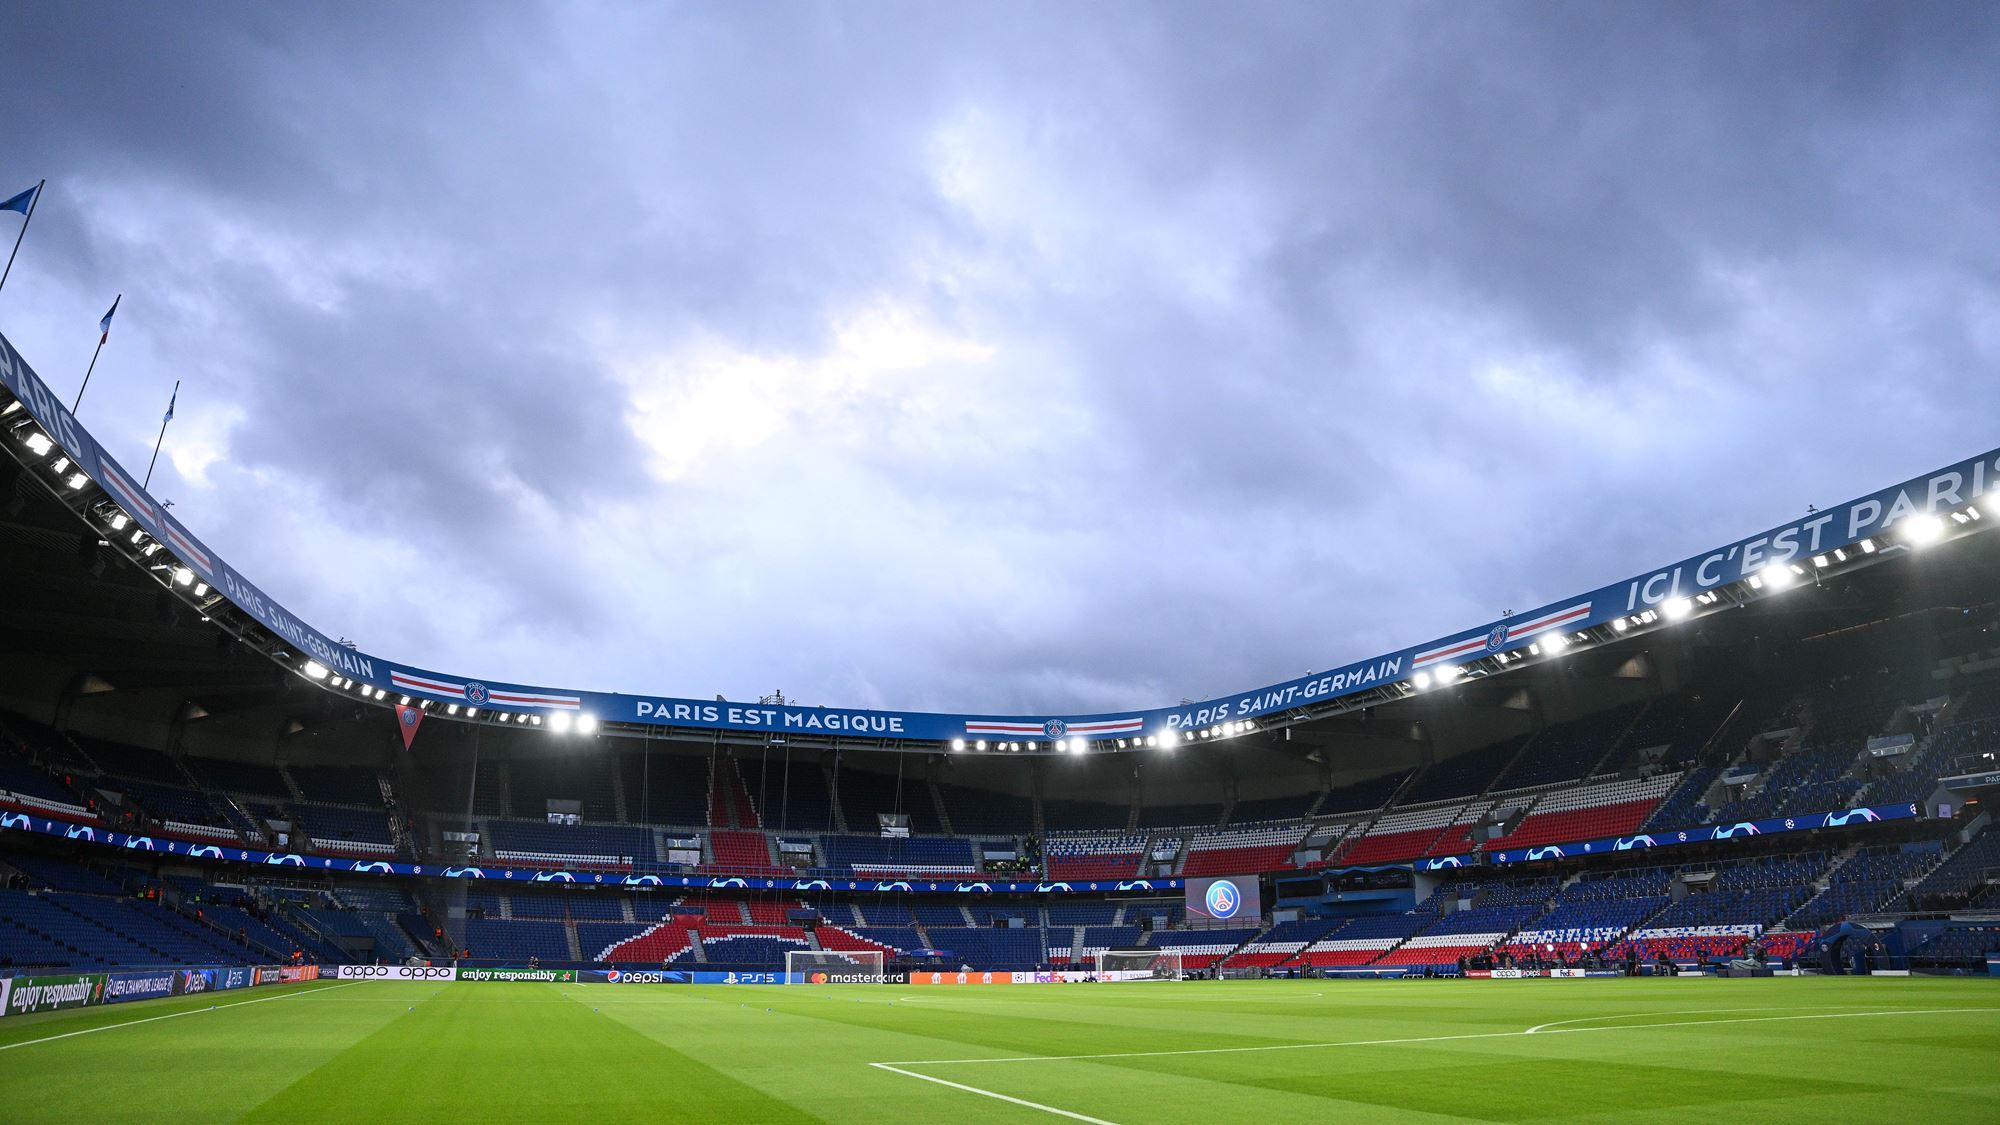 Newcastle United - Paris Saint-Germain tickets sold out, ballot now open